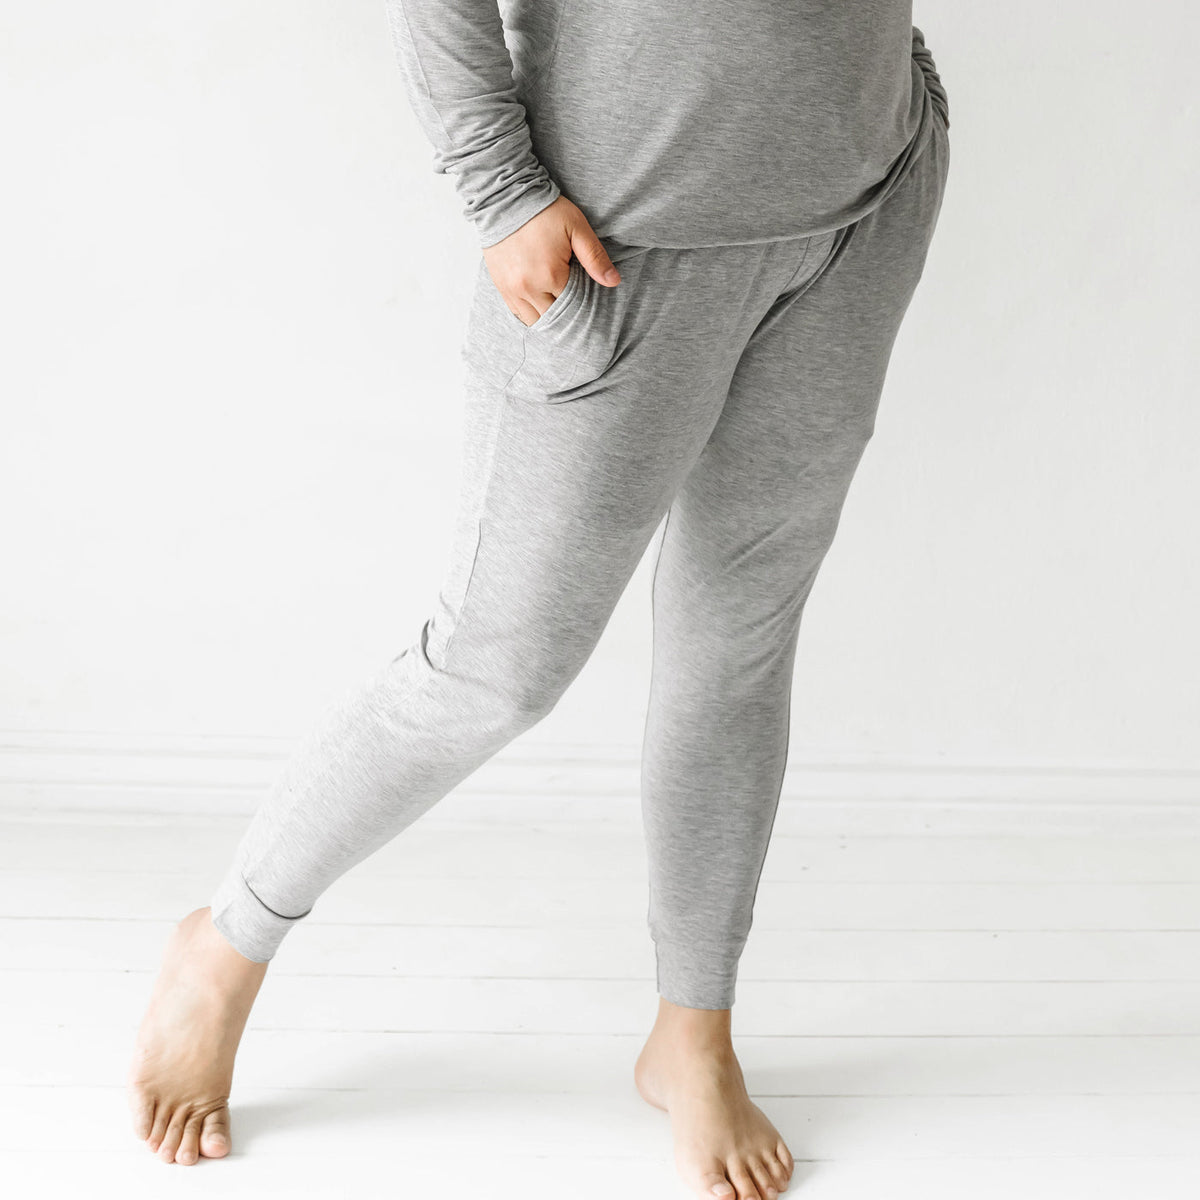 Silver Sparkle Texture Women's Pajama Pants Drawstring Lounge Palazzo Pants  Casual Stretch Comfy Bottoms Sleepwear L